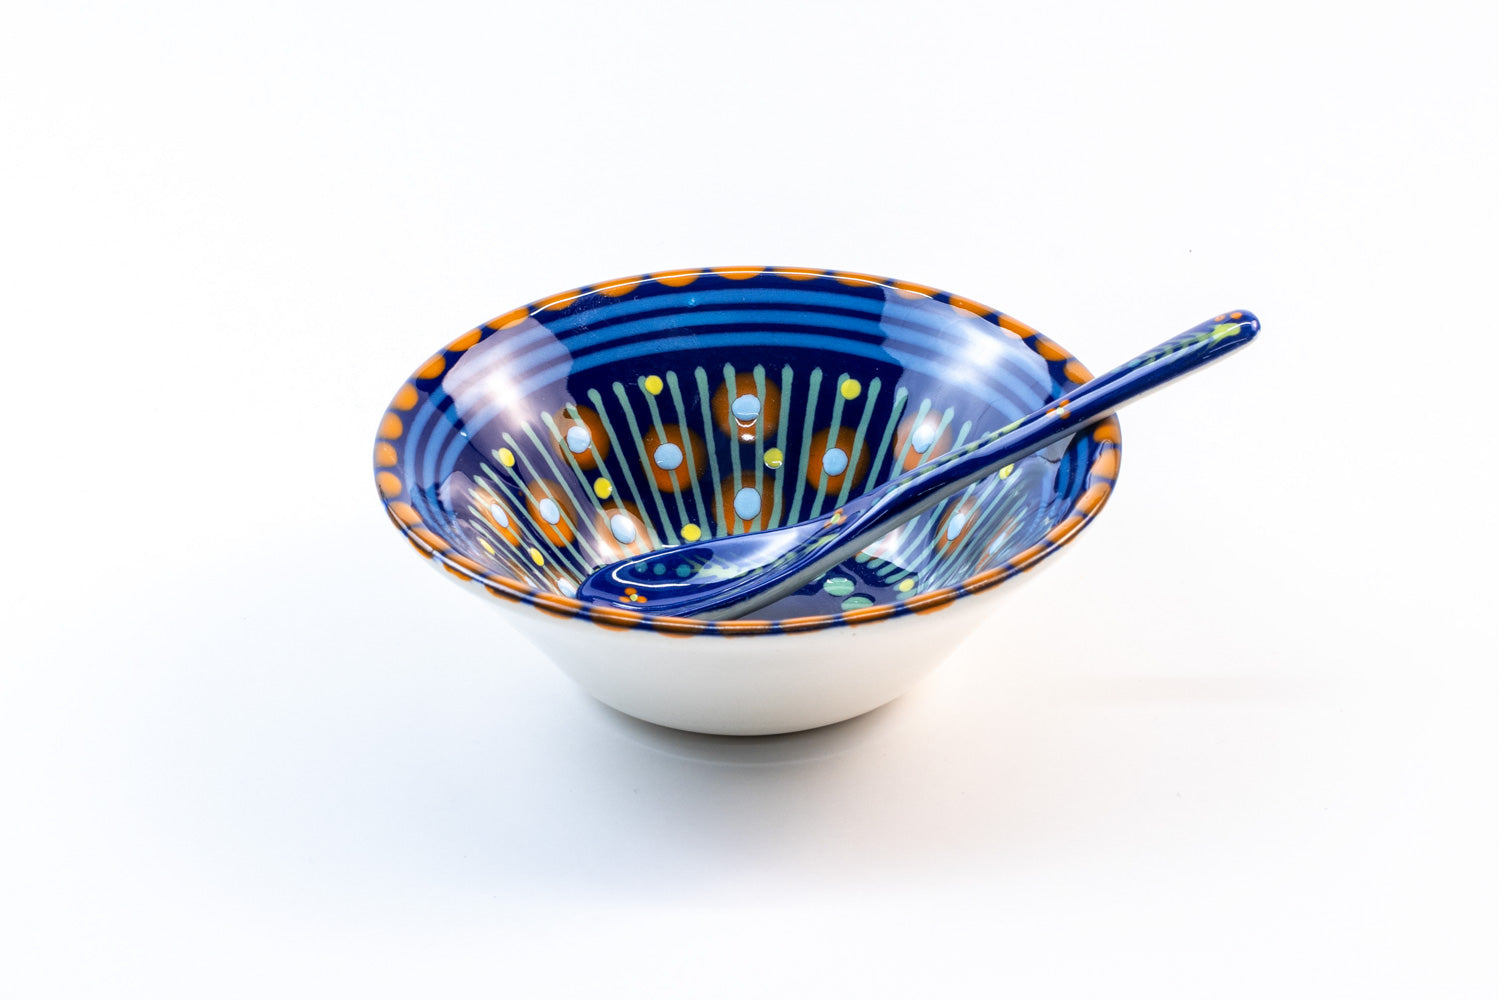 Ceramic Mini Nut Bowl in Indigo Blue with matching ceramic Indigo blue small spoon.